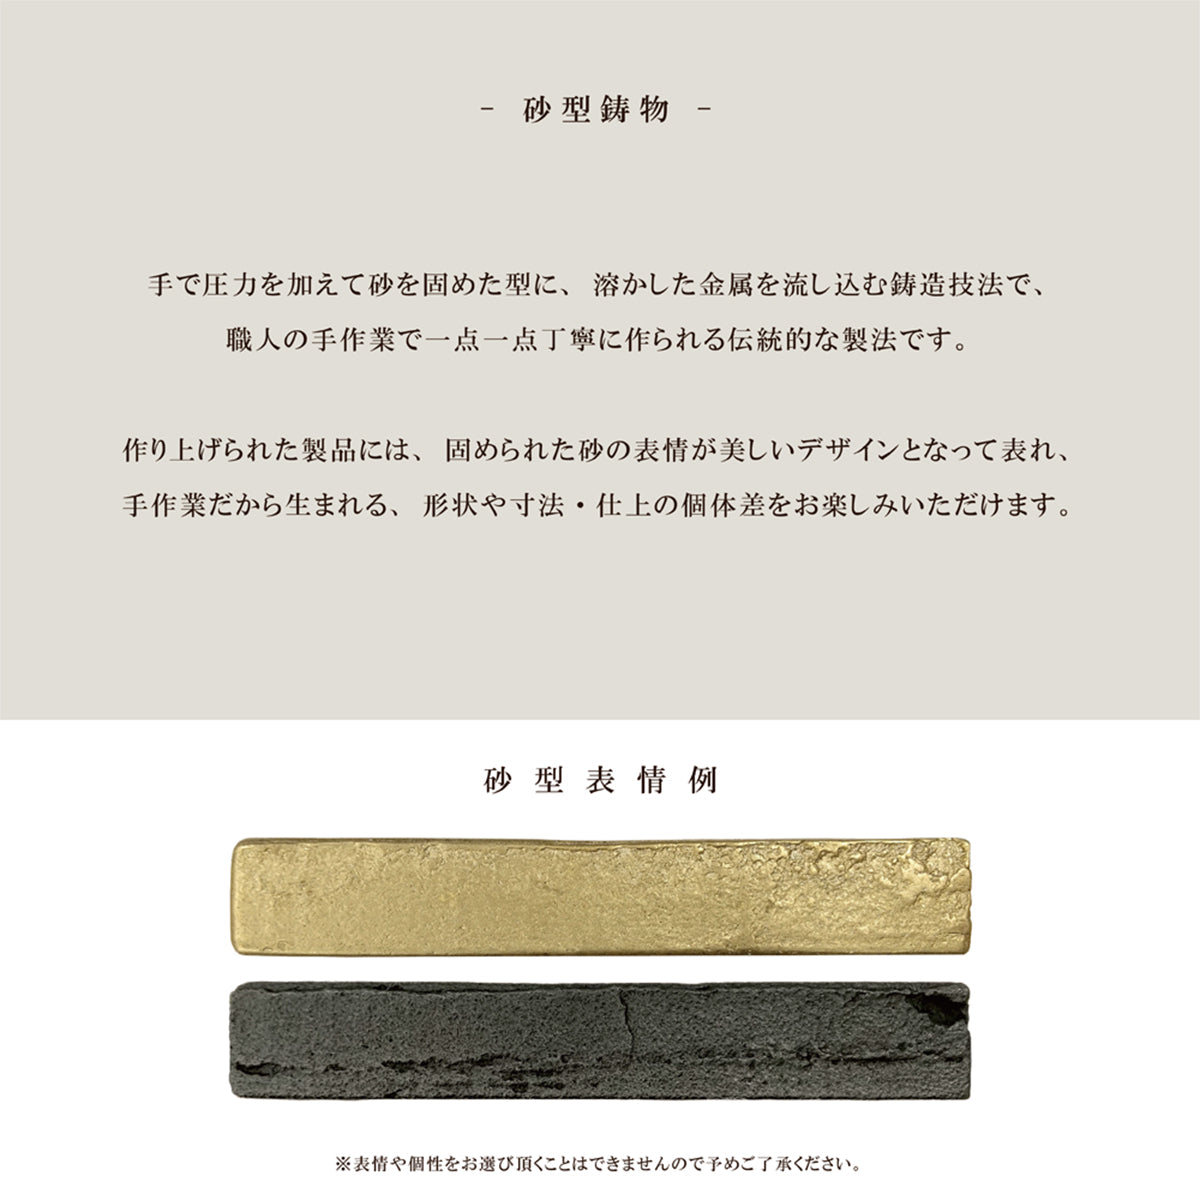 Brass Casting 真鍮鋳物 ハンドル (小型 真鍮色 HB-202)